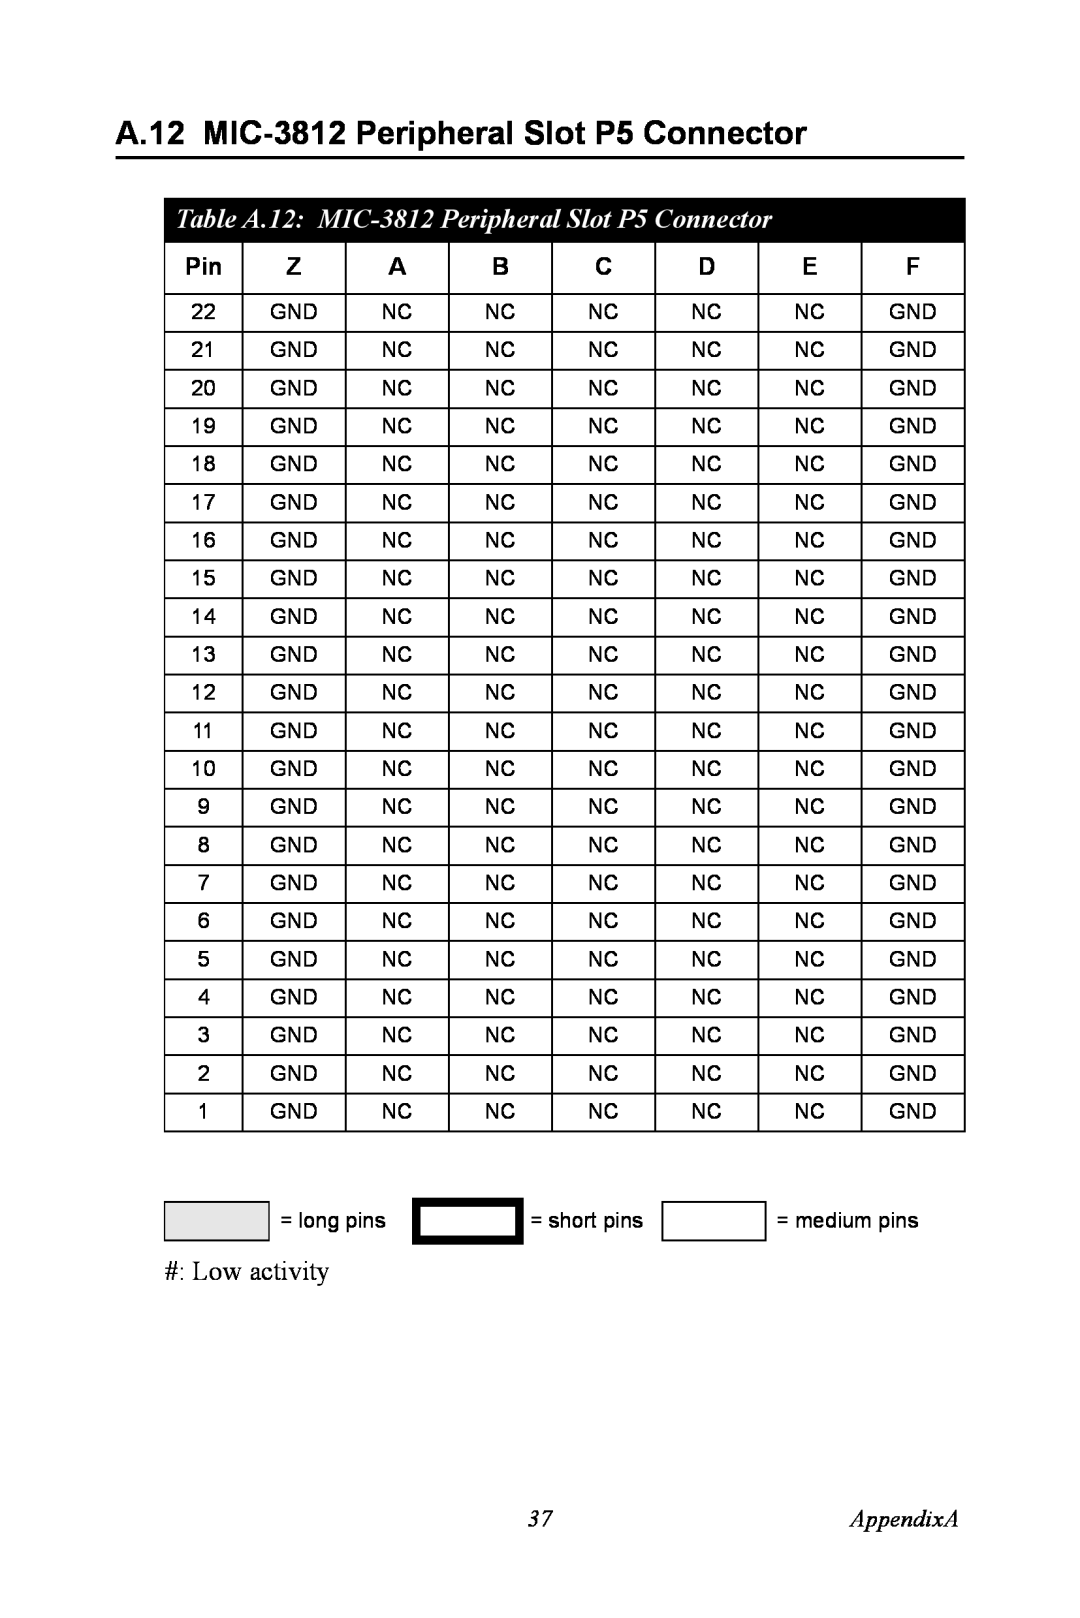 Advantech MIC-3043 user manual Table A.12 MIC-3812 Peripheral Slot P5 Connector, AppendixA 